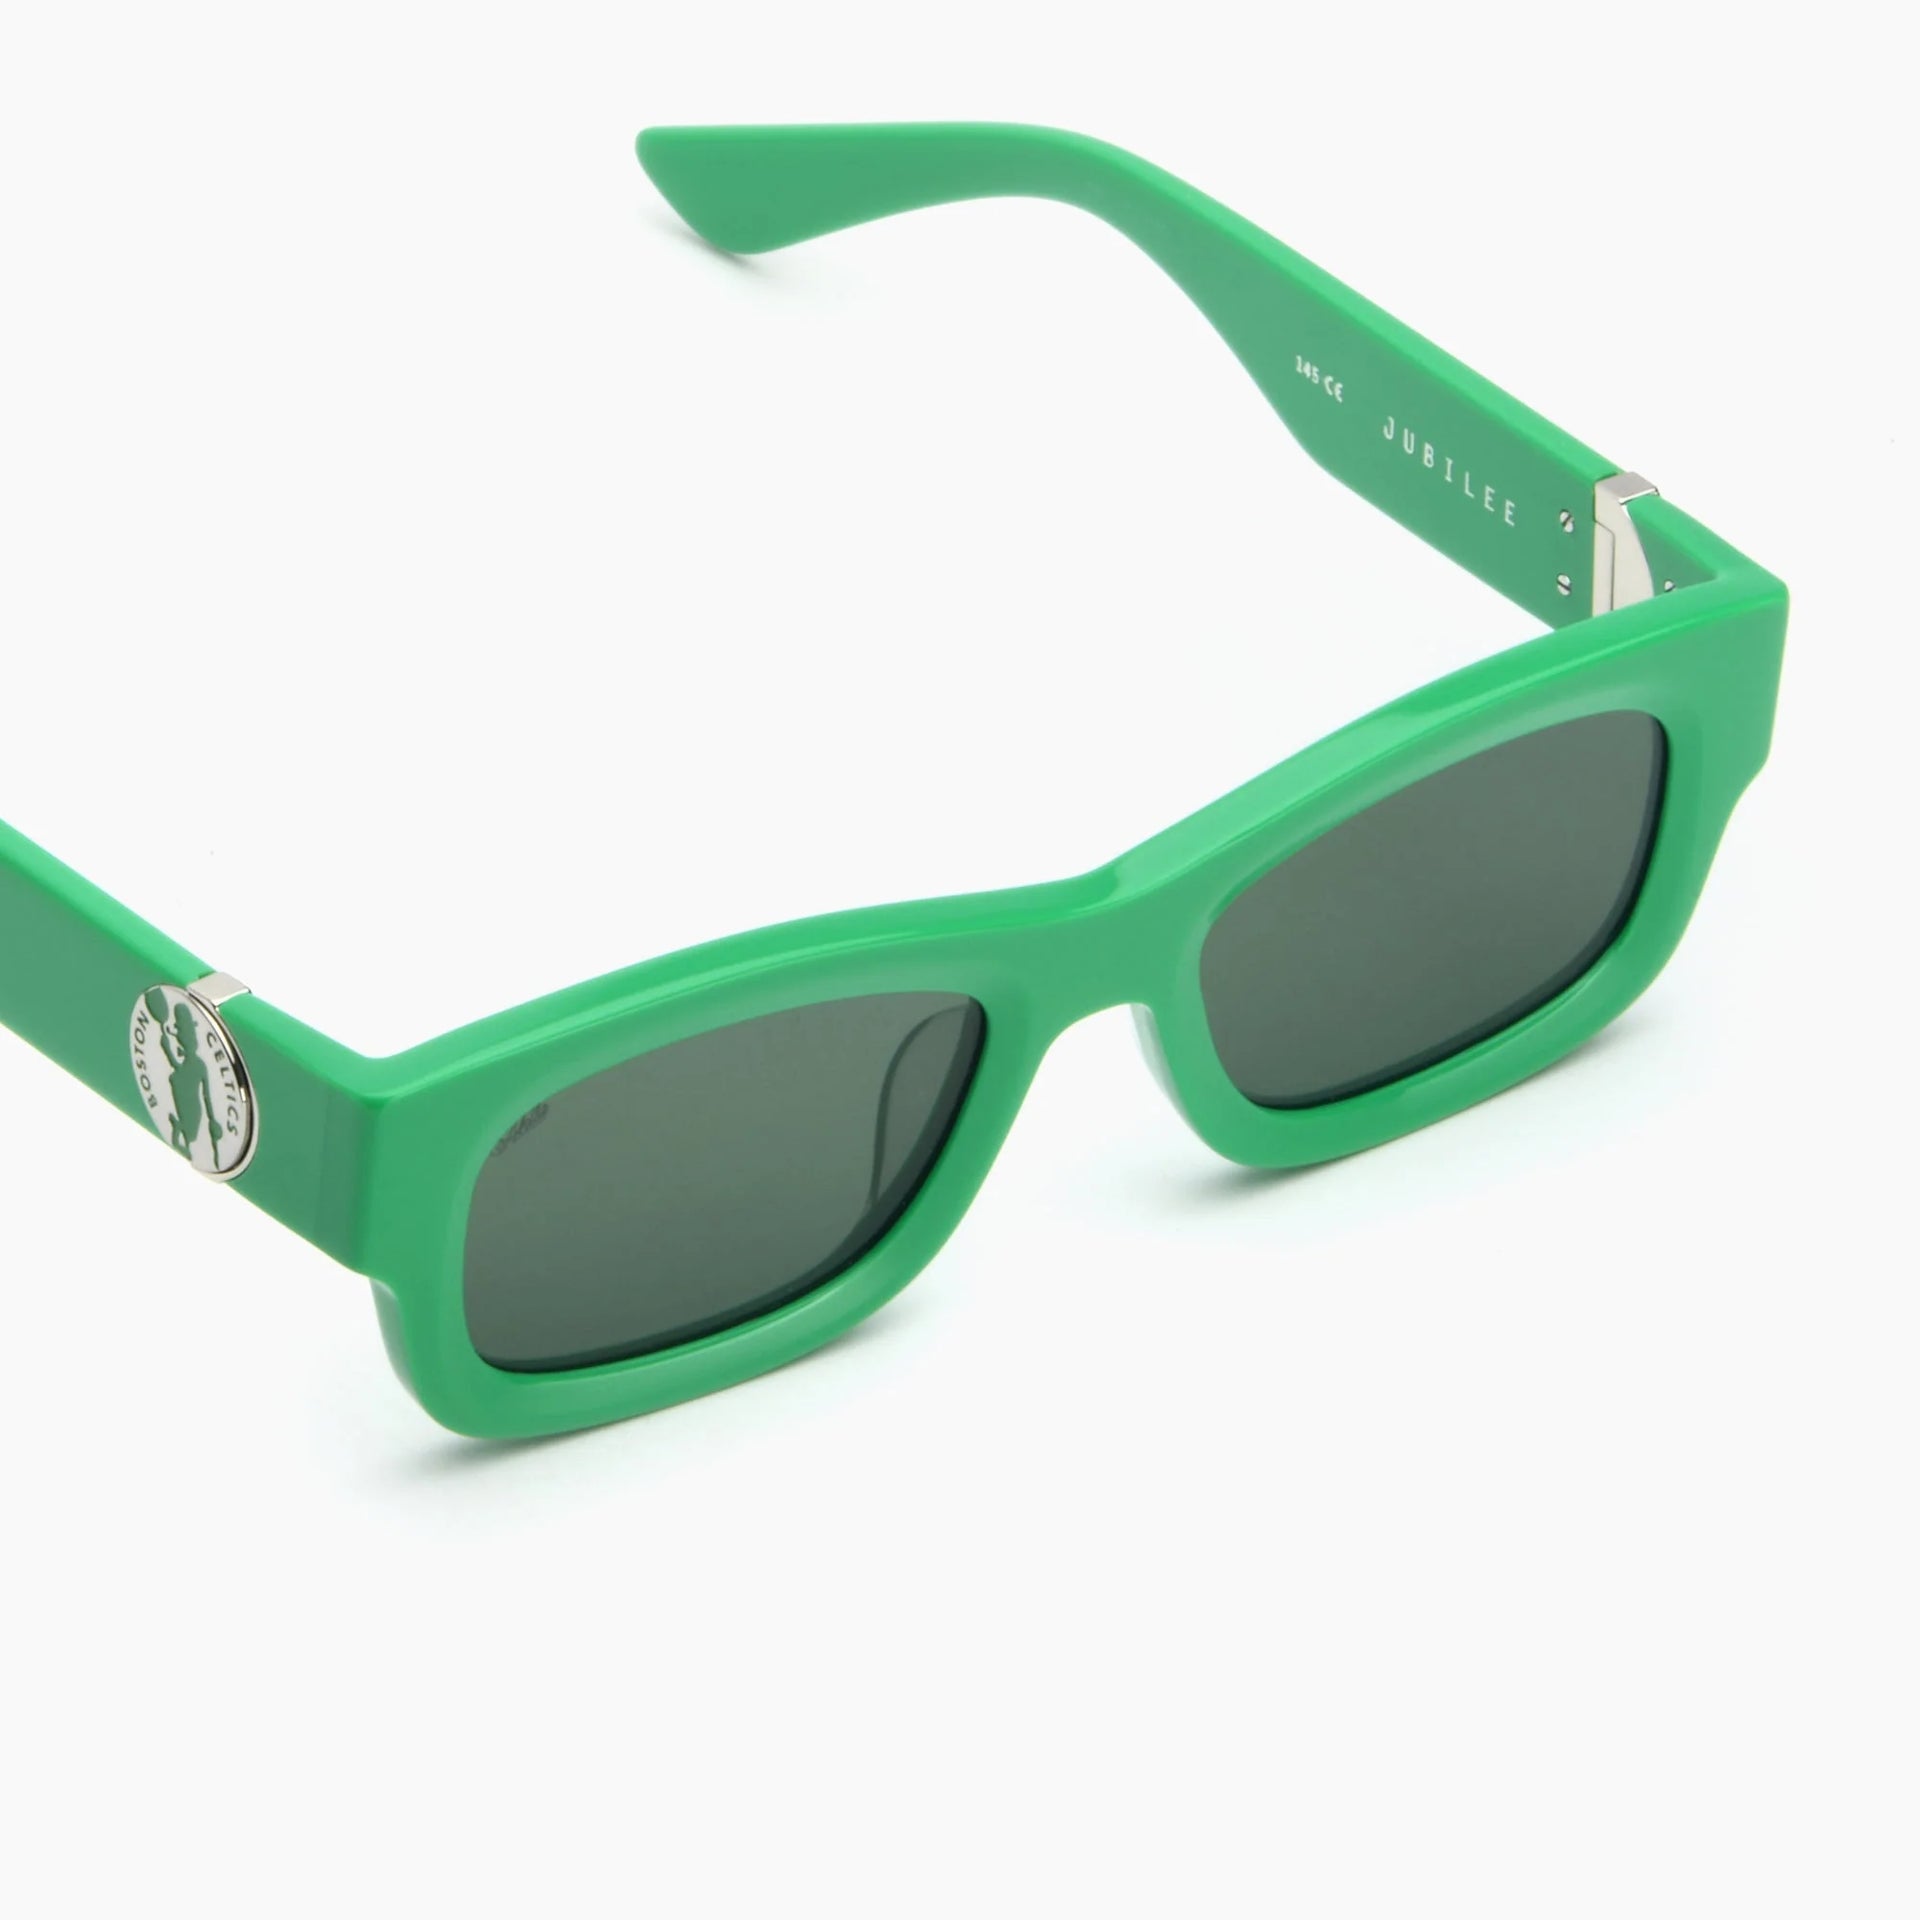 Jubilee x Boston Celtics Sunglasses - Celtics Green/Black